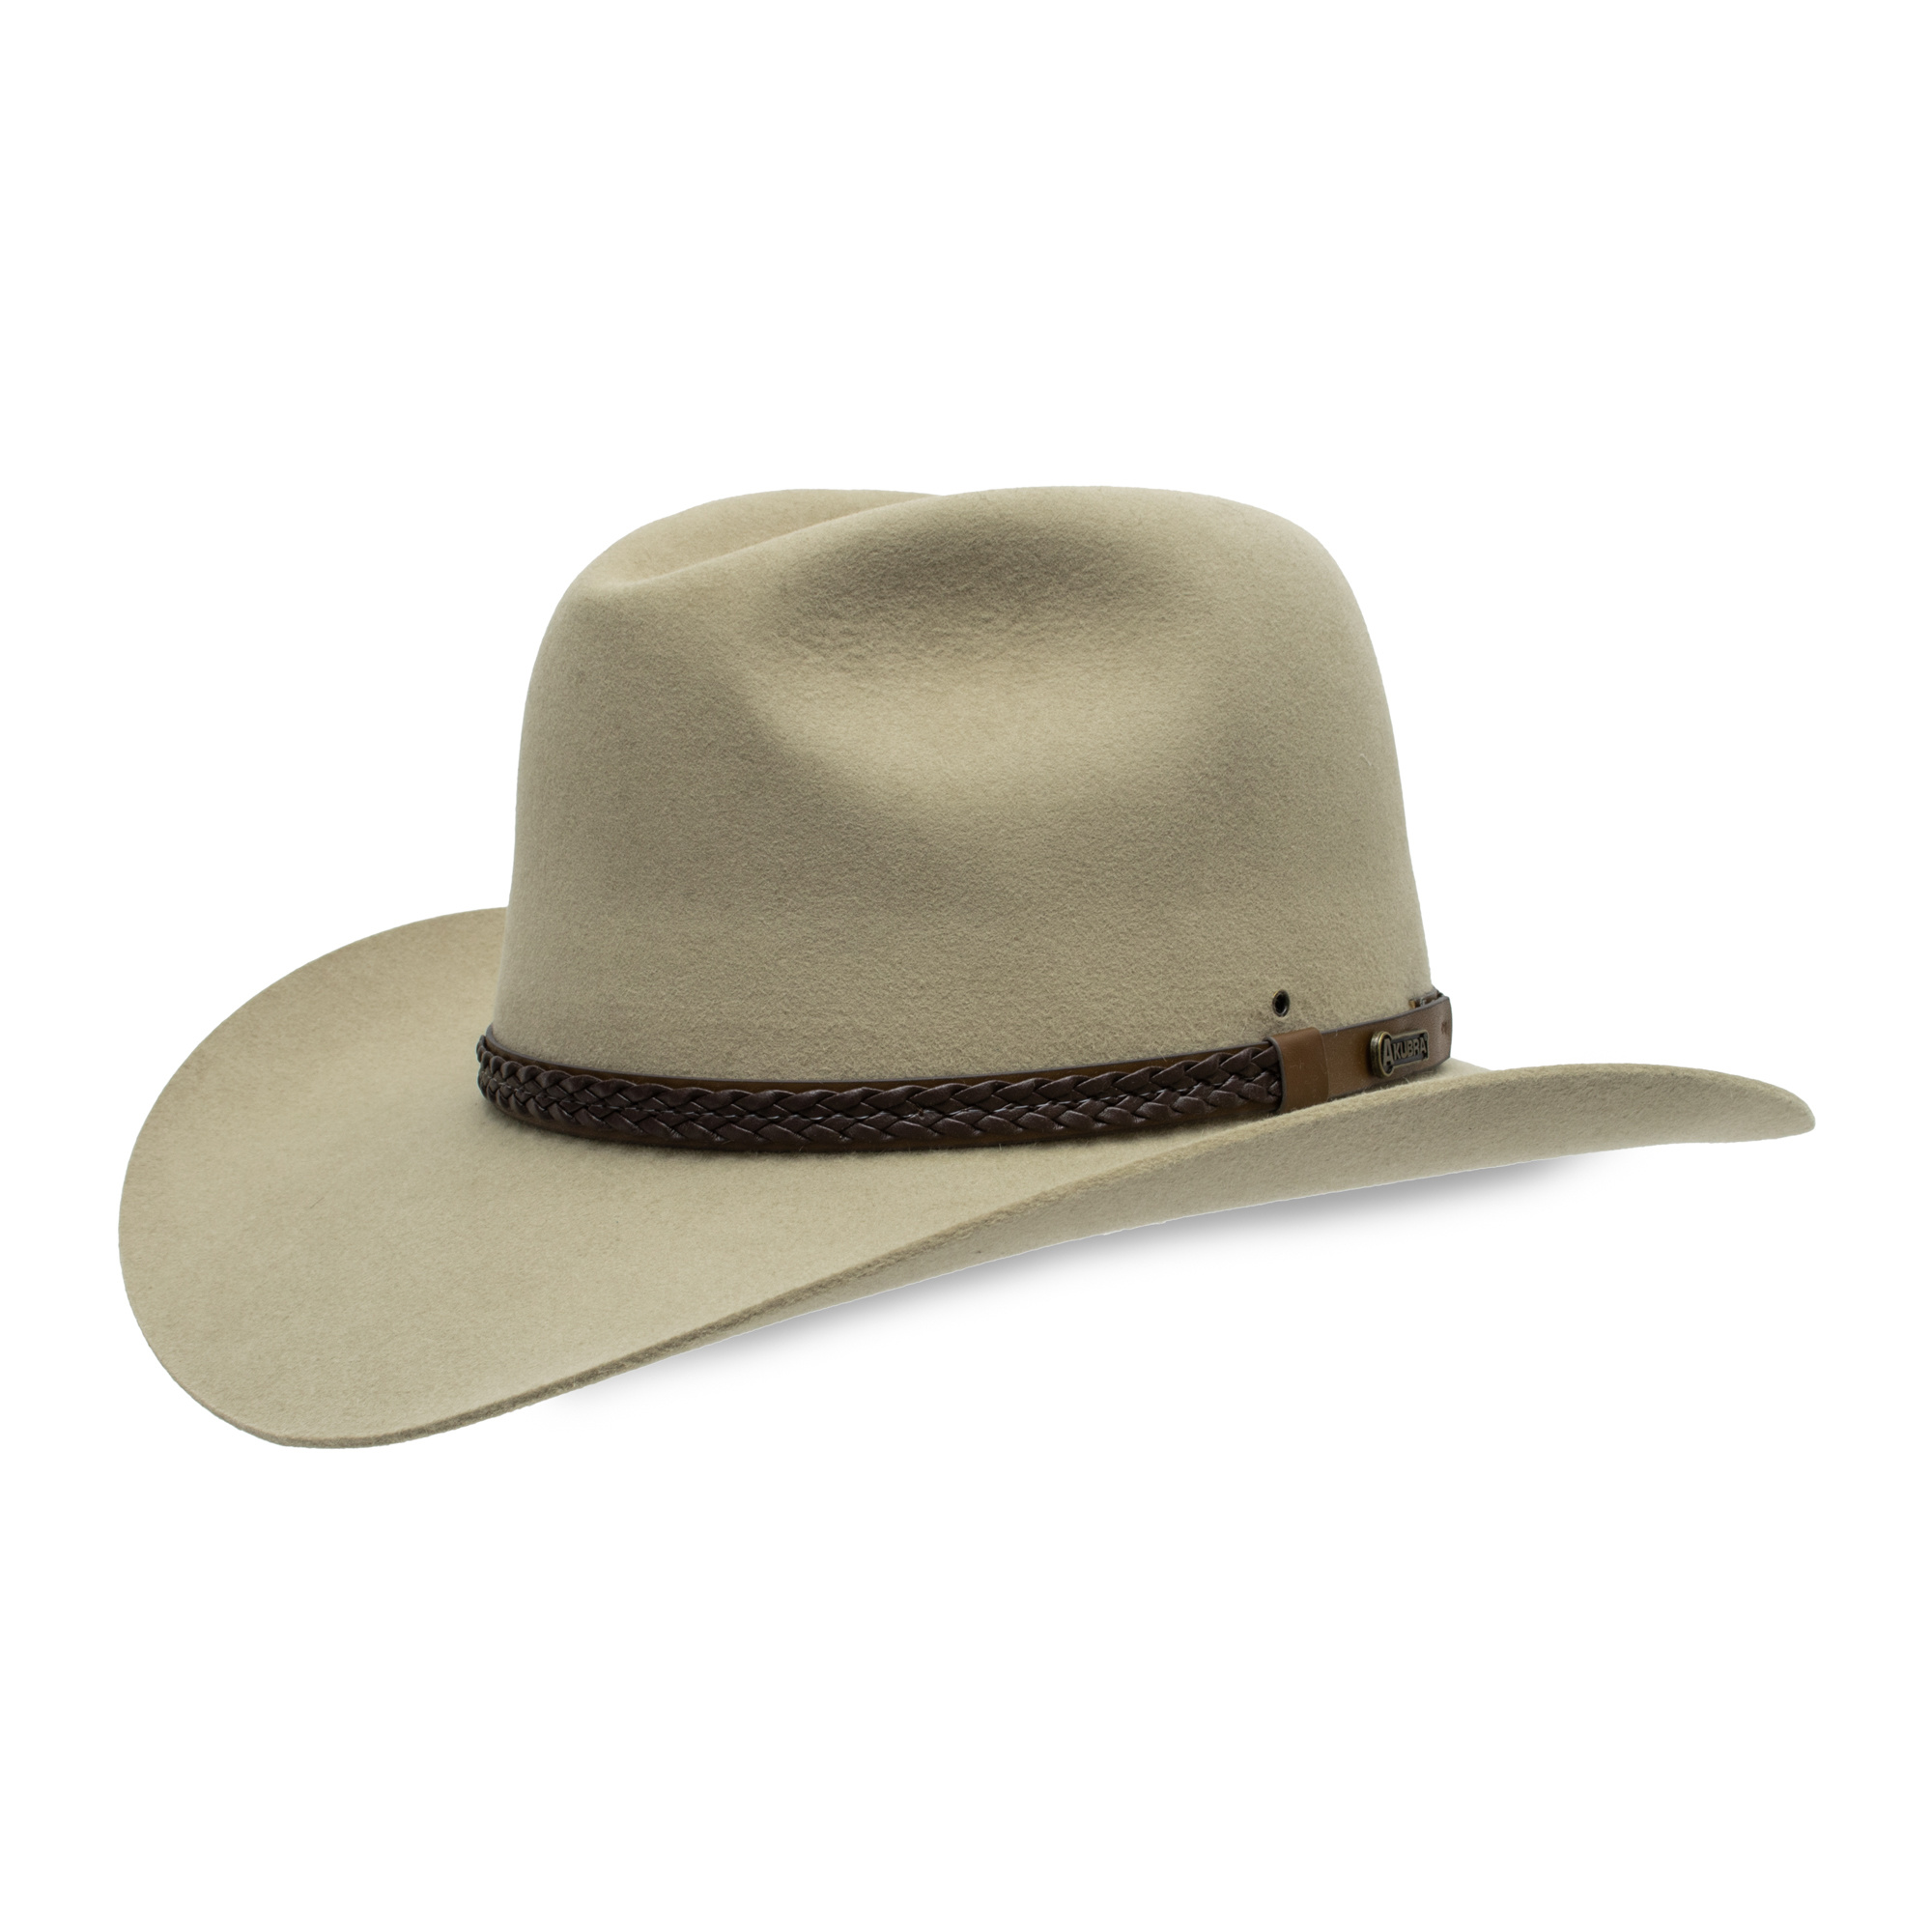 Kiandra Fur Felt Cowboy Hat AKUBRA | Fast Shipping | Henri Henri ...